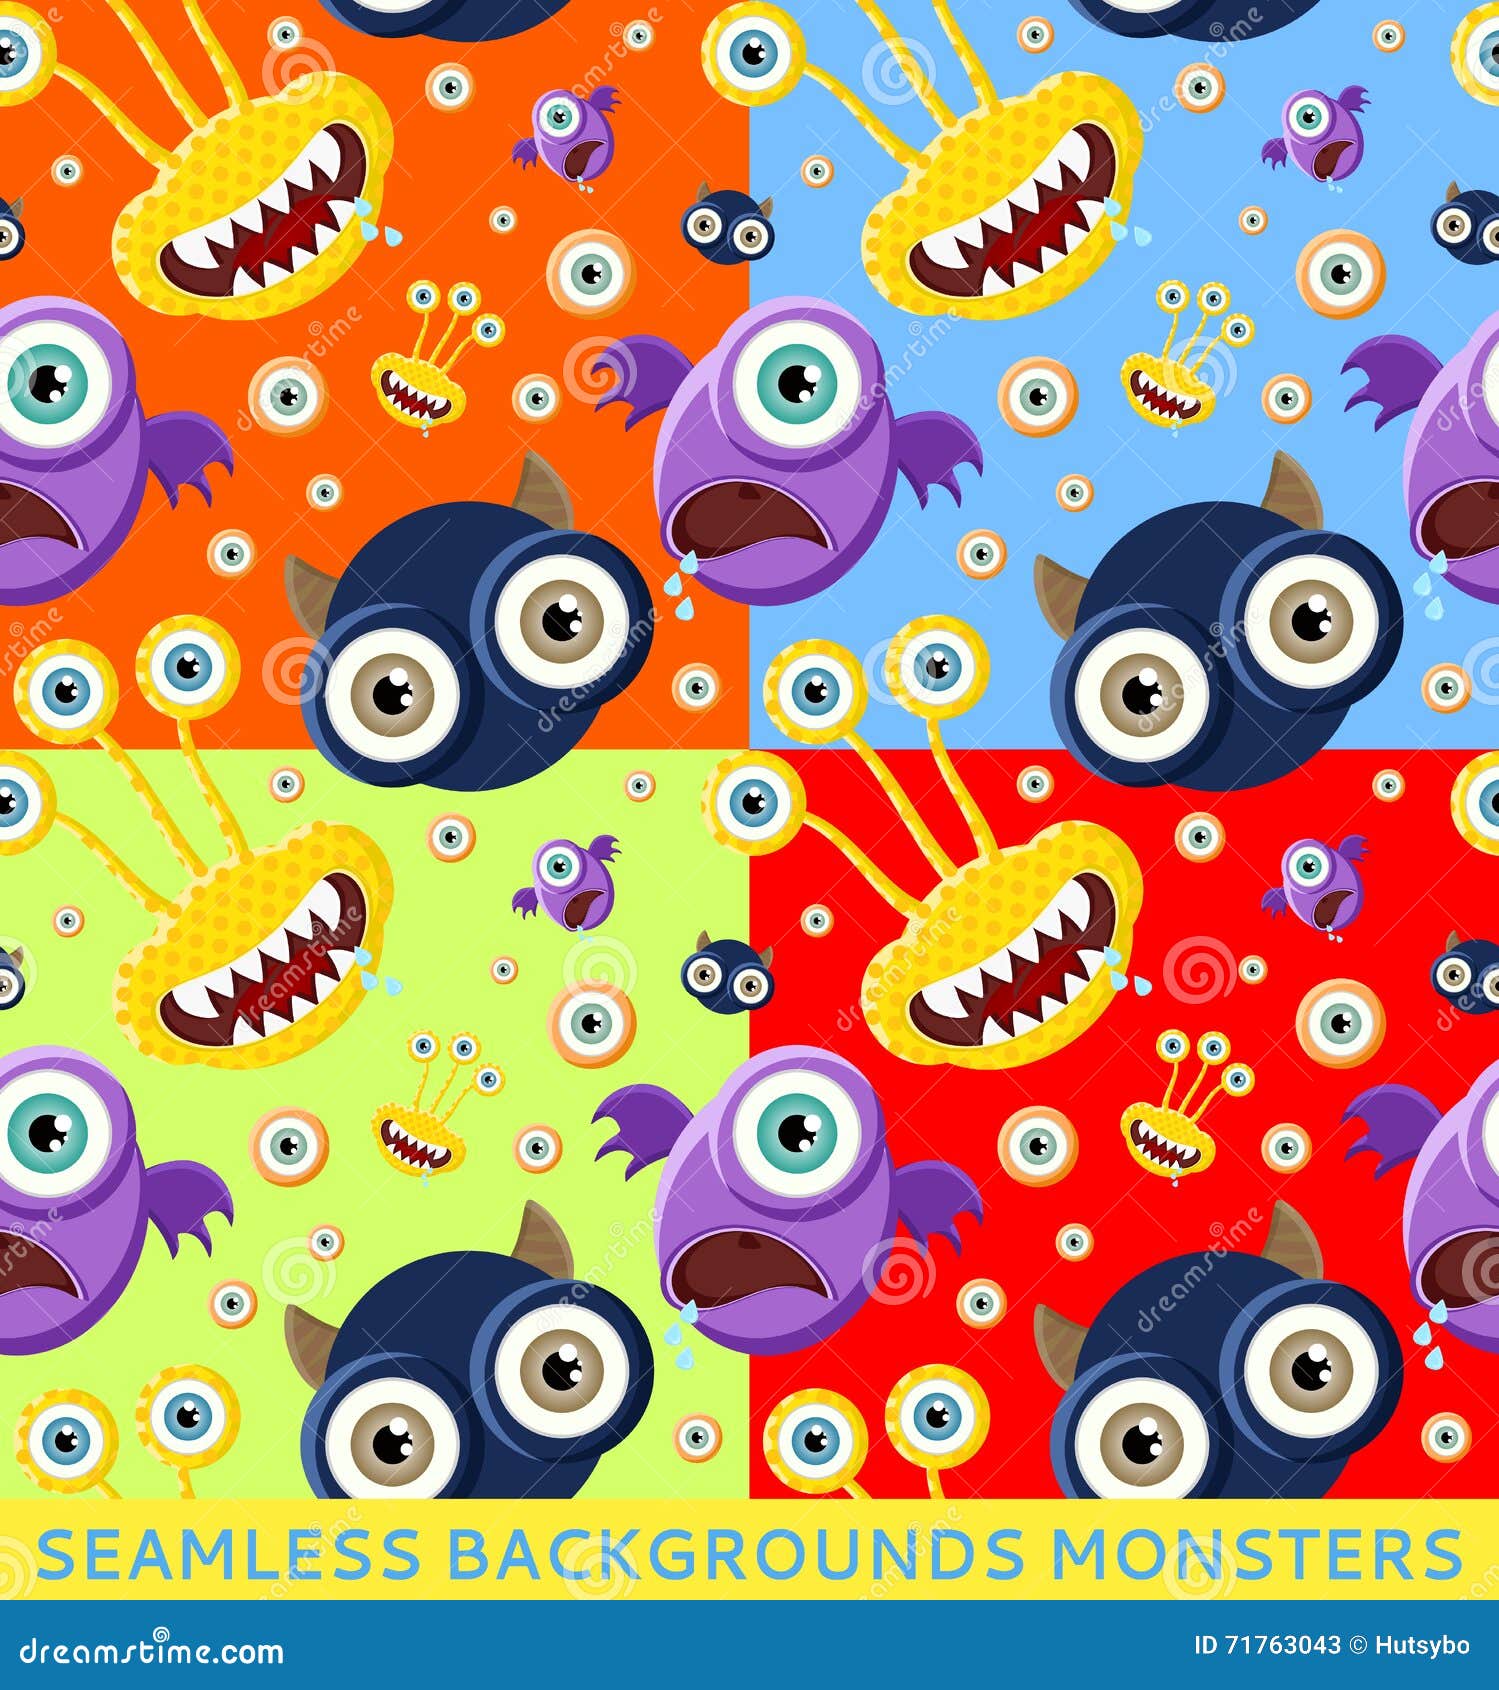 Kids Monsters Seamless Stock Vector Illustration Of Background 71763043